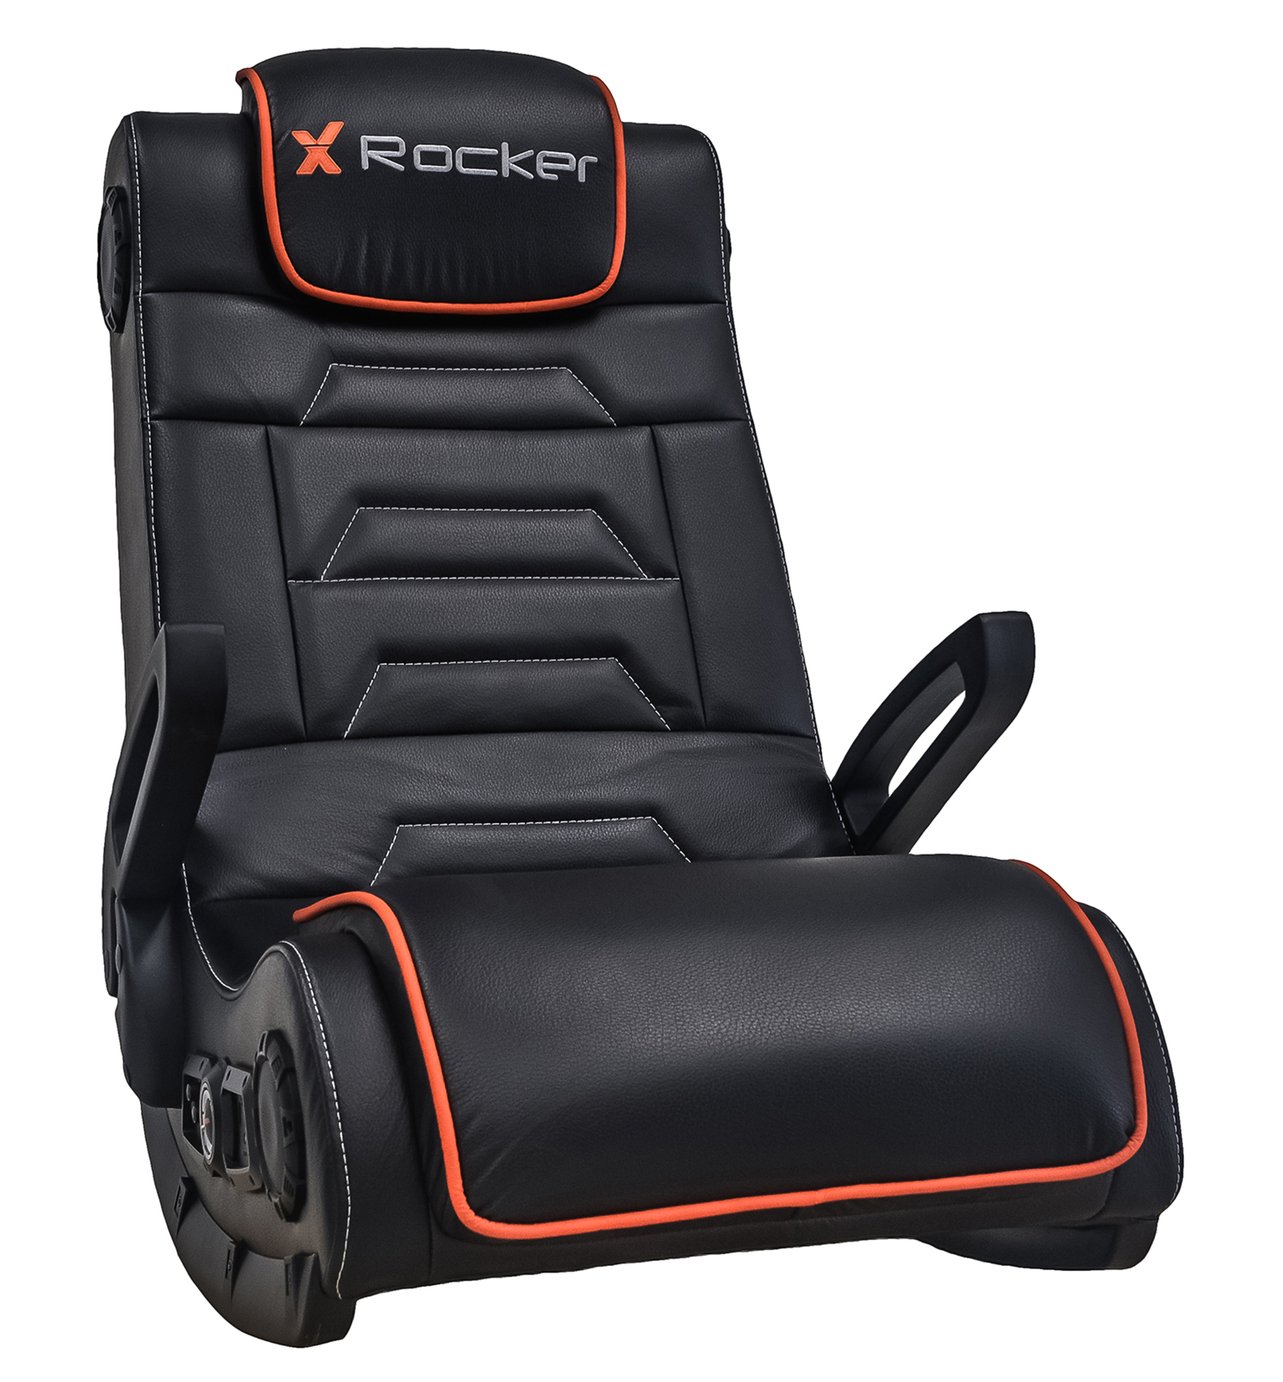 XRocker Sentinel Floor Rocker Gaming Chair Reviews